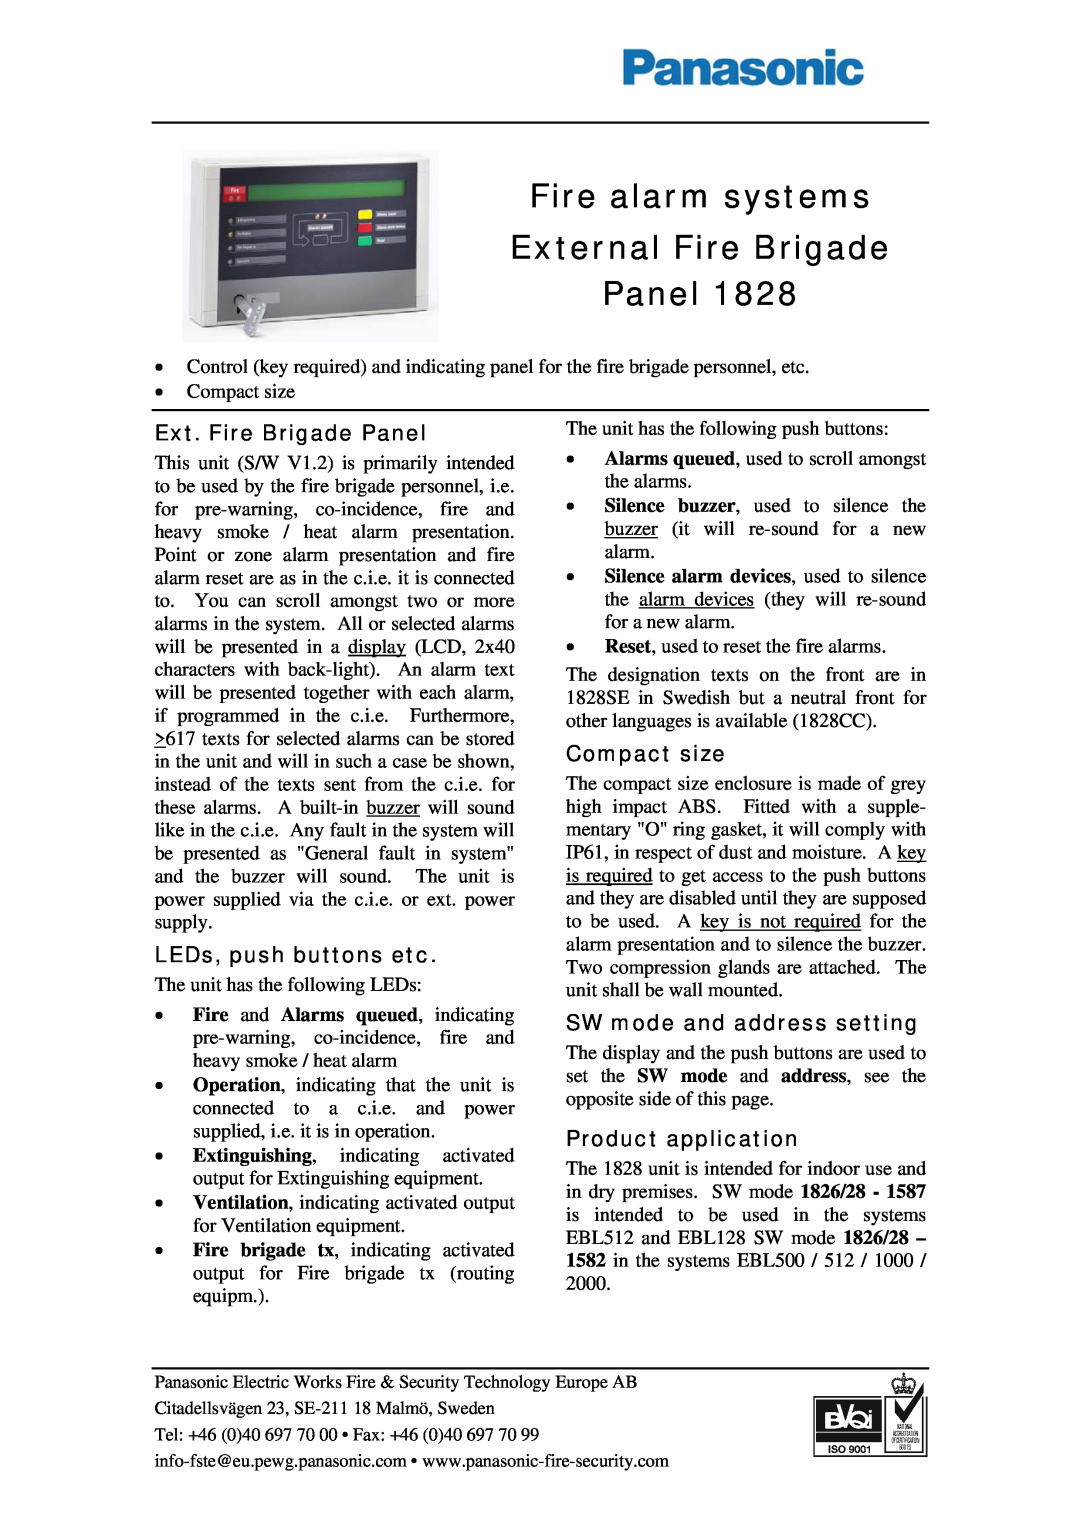 Panasonic 1828 manual Fire alarm systems External Fire Brigade Panel, Ext. Fire Brigade Panel, LEDs, push buttons etc 